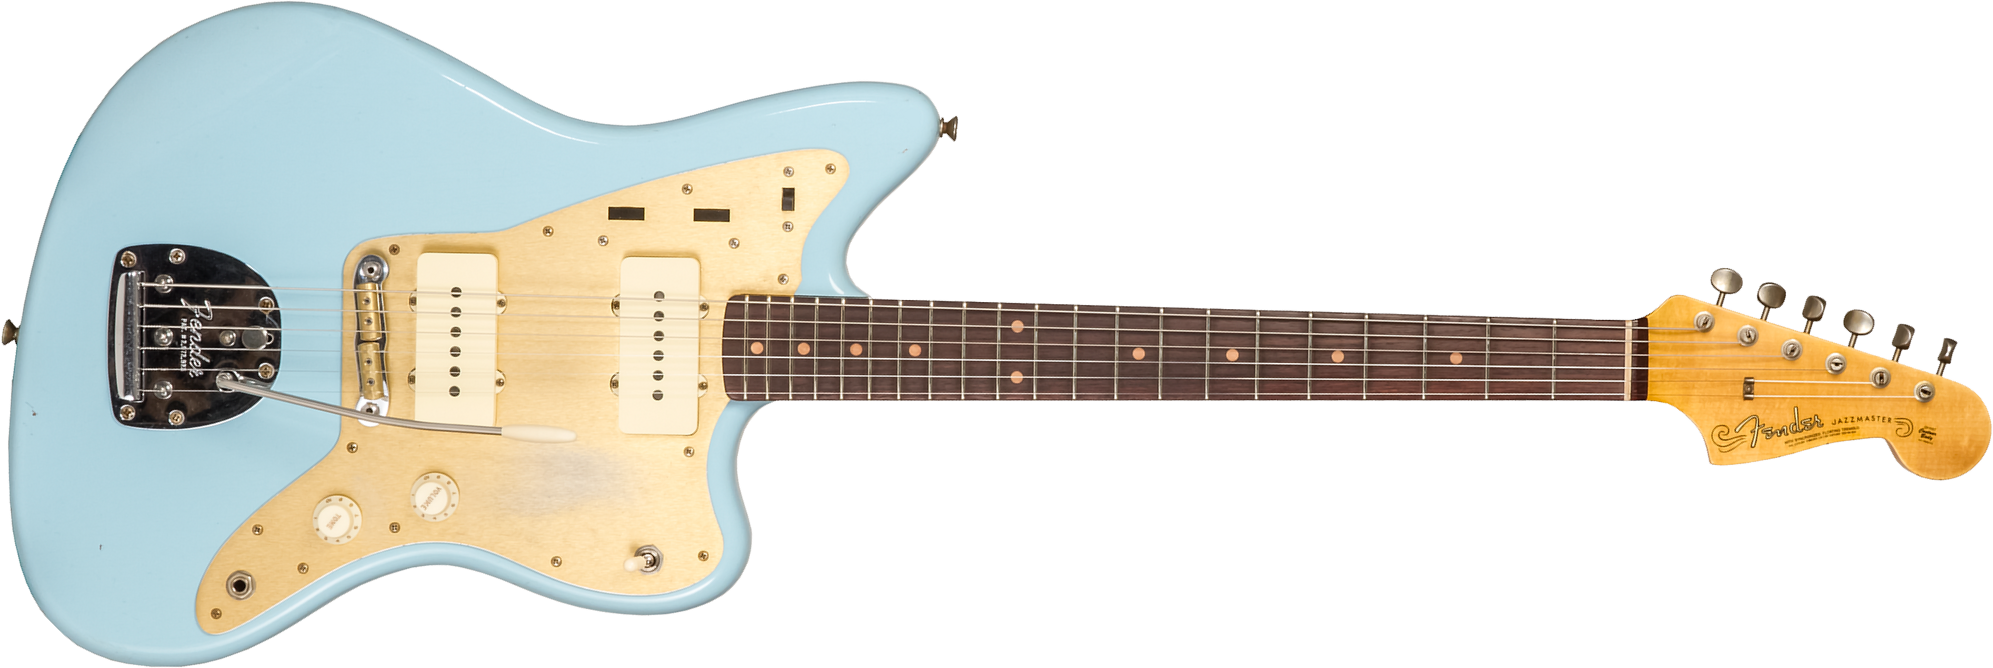 Fender Custom Shop Jazzmaster 1959 250k 2s Trem Rw #cz576203 - Journeyman Relic Aged Daphne Blue - Retro-Rock-E-Gitarre - Main picture